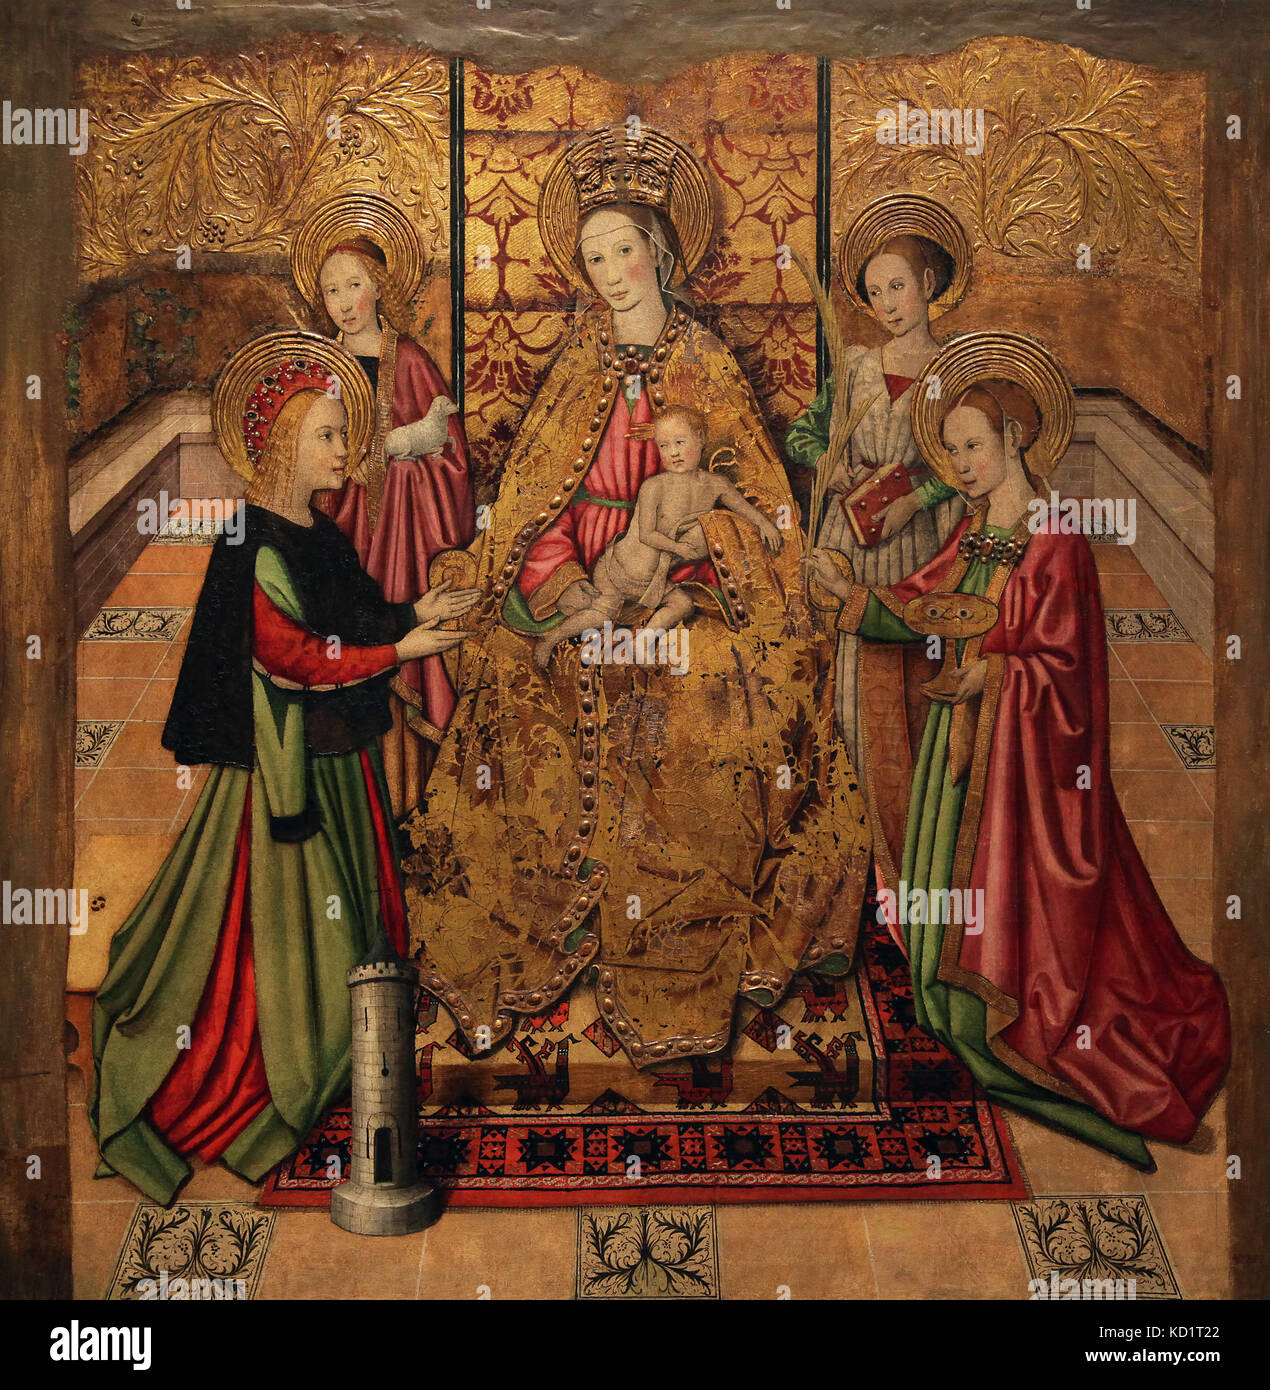 Mare de deu i santes the virgin and the saints by Jaume Huguet 1412-1492 Catalan painter.Medieval Gothic Art.Spain Stock Photo